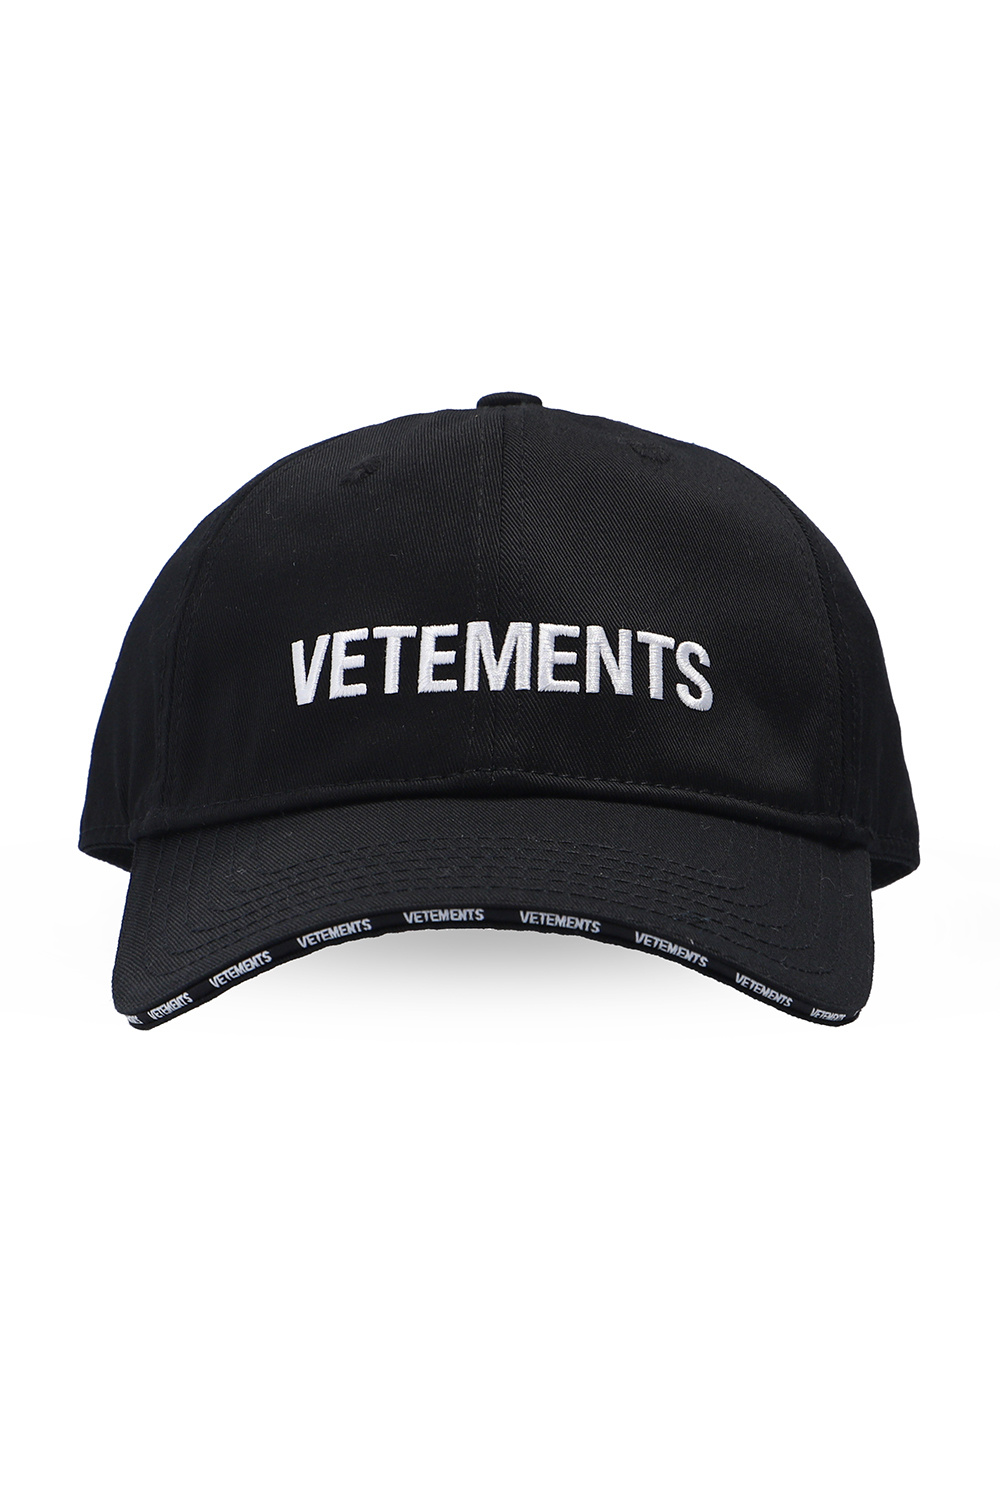 VETEMENTS cap s Traveler embroidered IetpShops men hat - - lighters Jacobs The Marc GB Black Knitwear